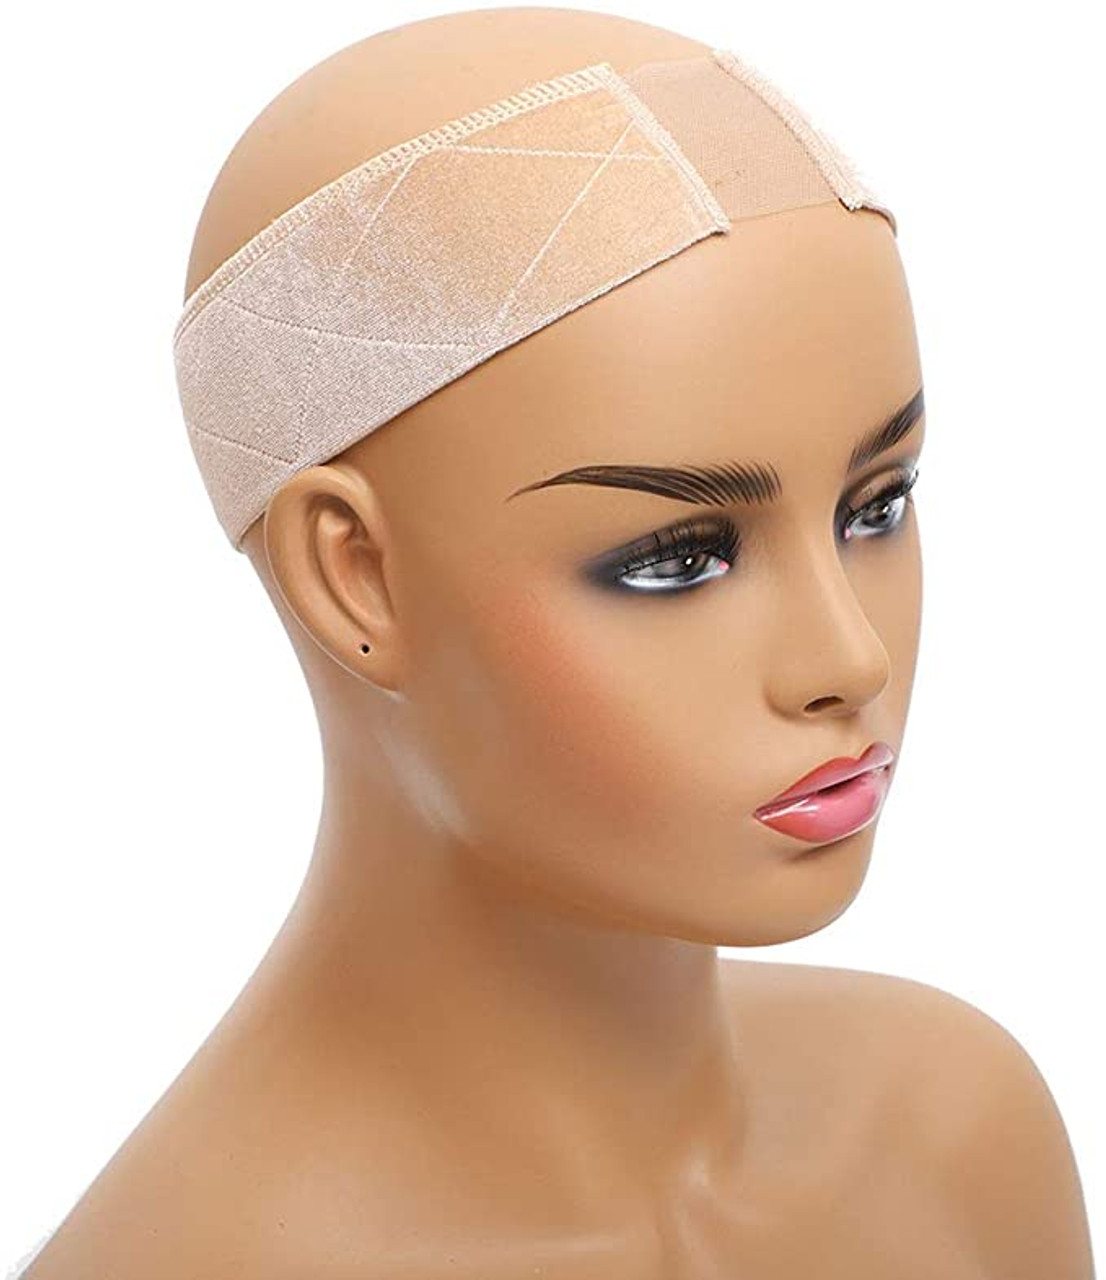 Stay Put Secure Wig Grip Headband by Jon Renau